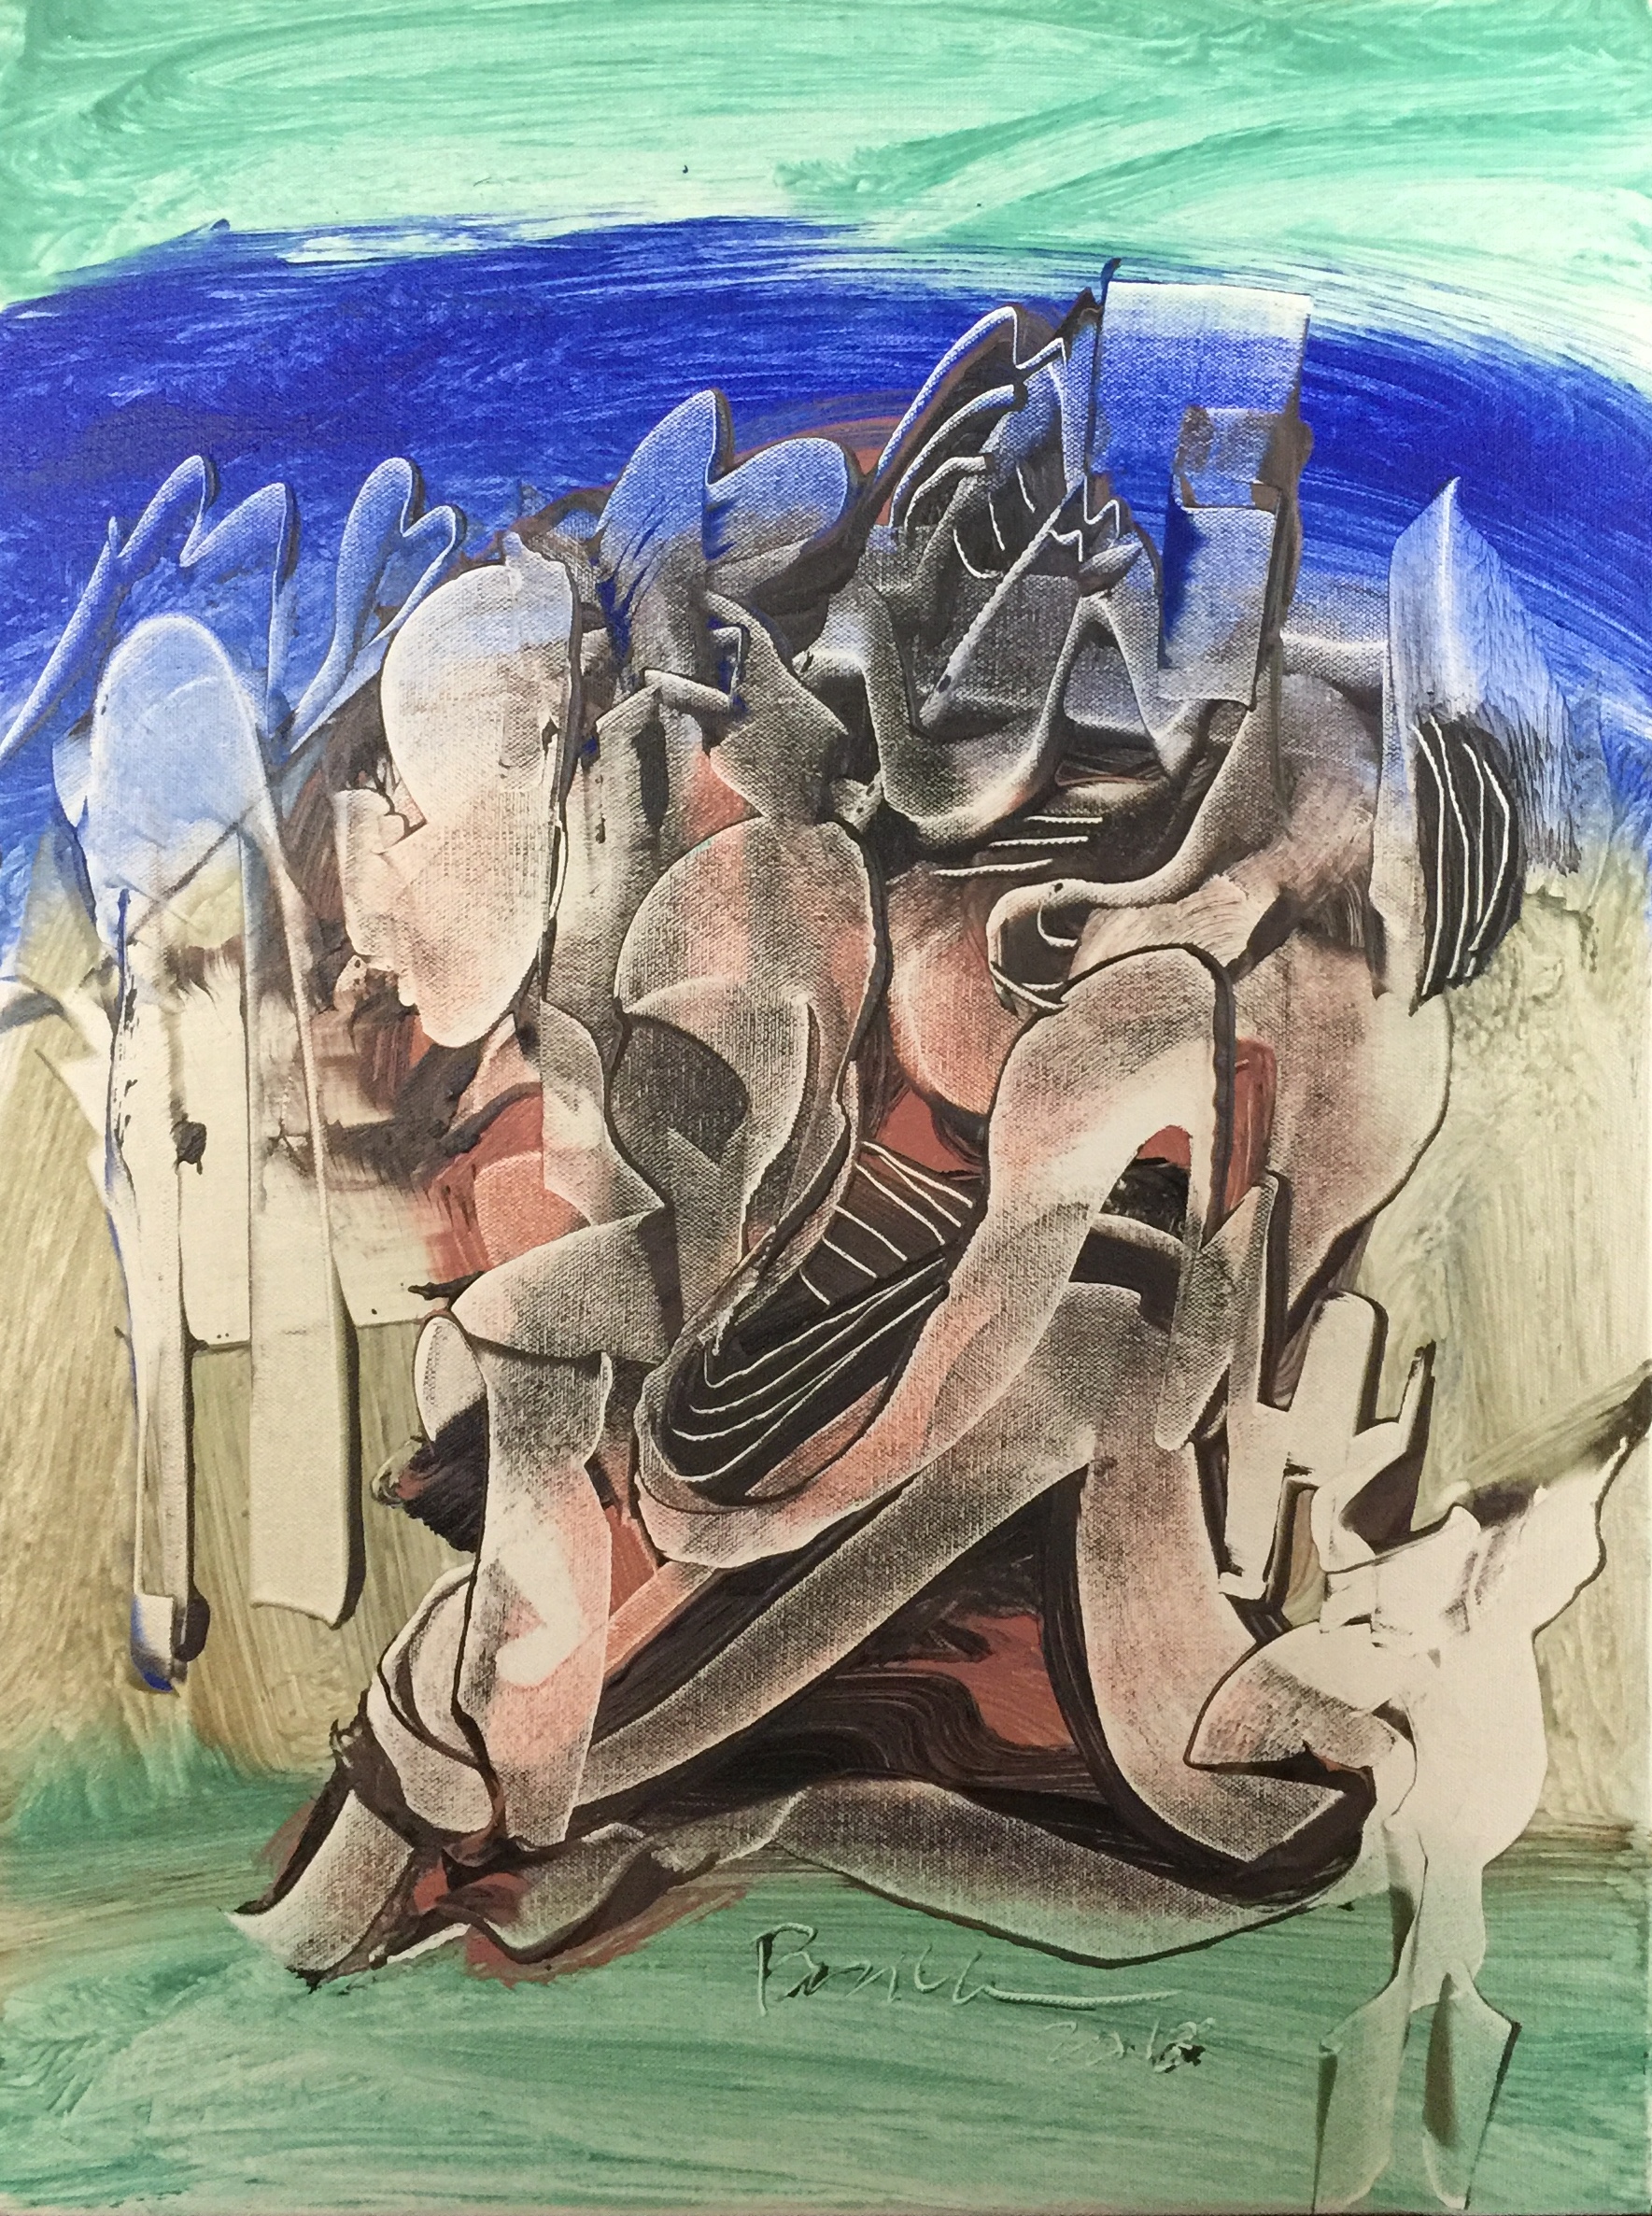  Wares, 2018, 24" x 18", Acrylic on Canvas 